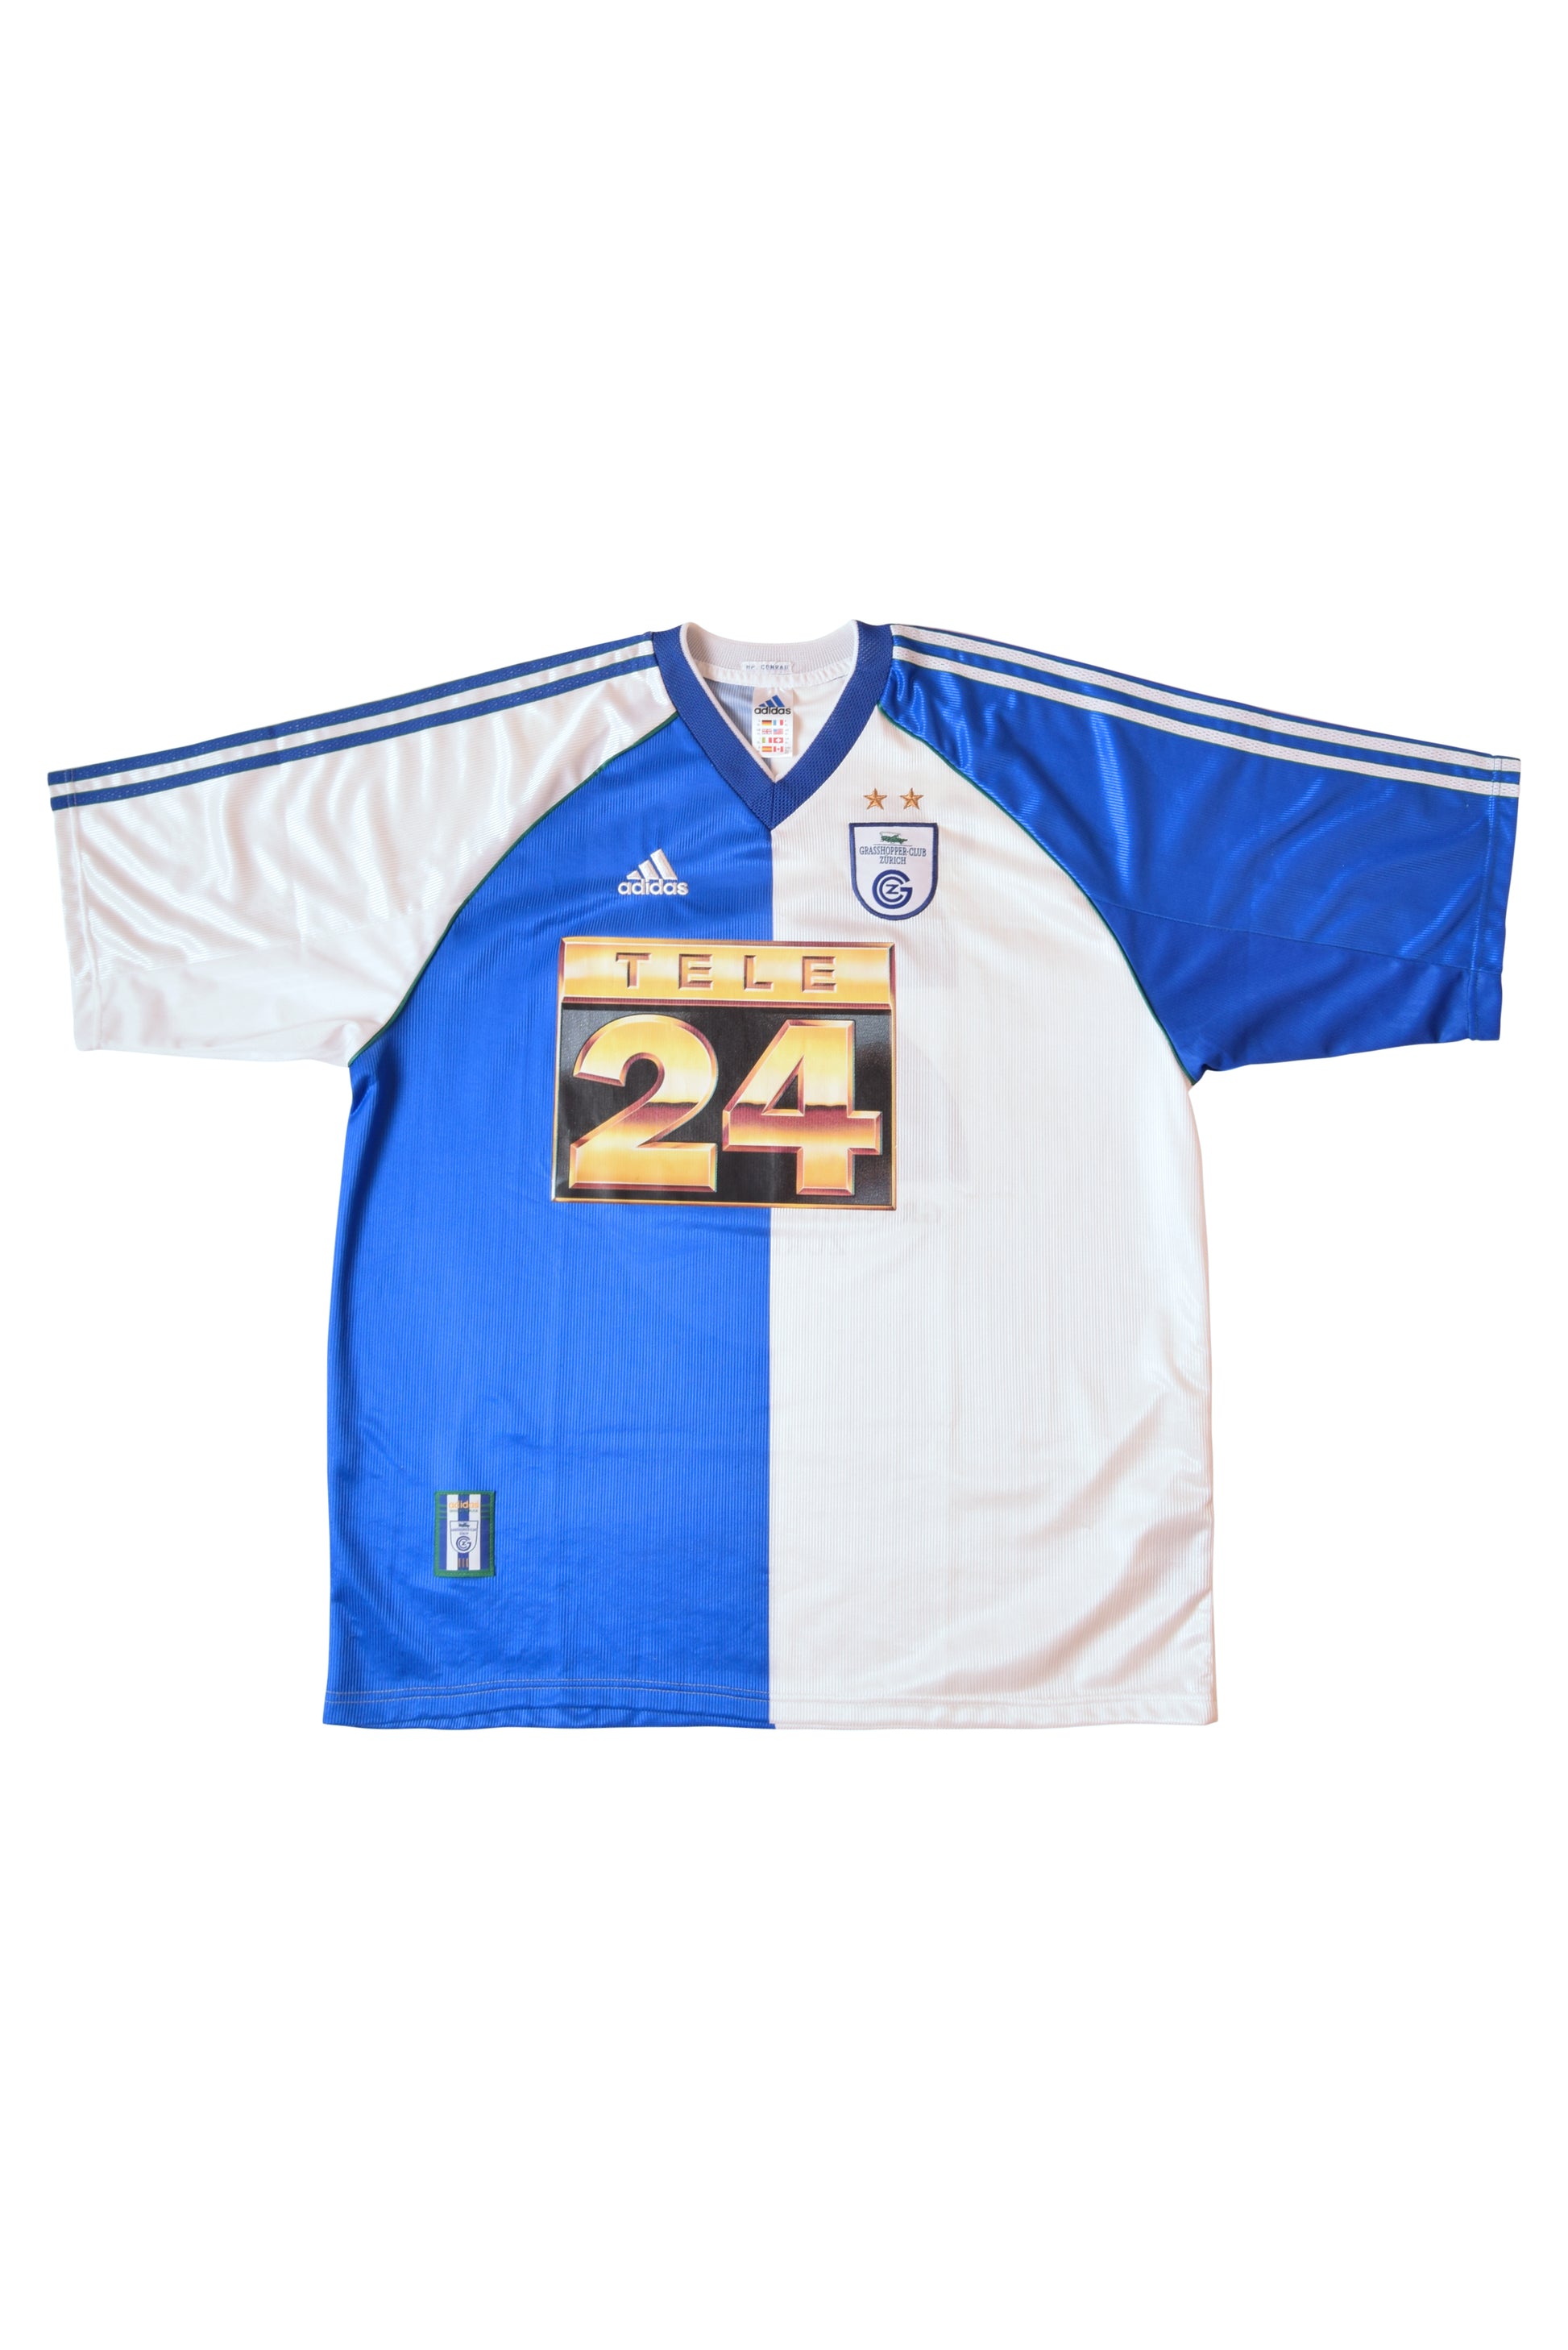 Vintage Football shirt Home Grasshopper Zurich Chapuisat Size XL '99-'00 Made in England